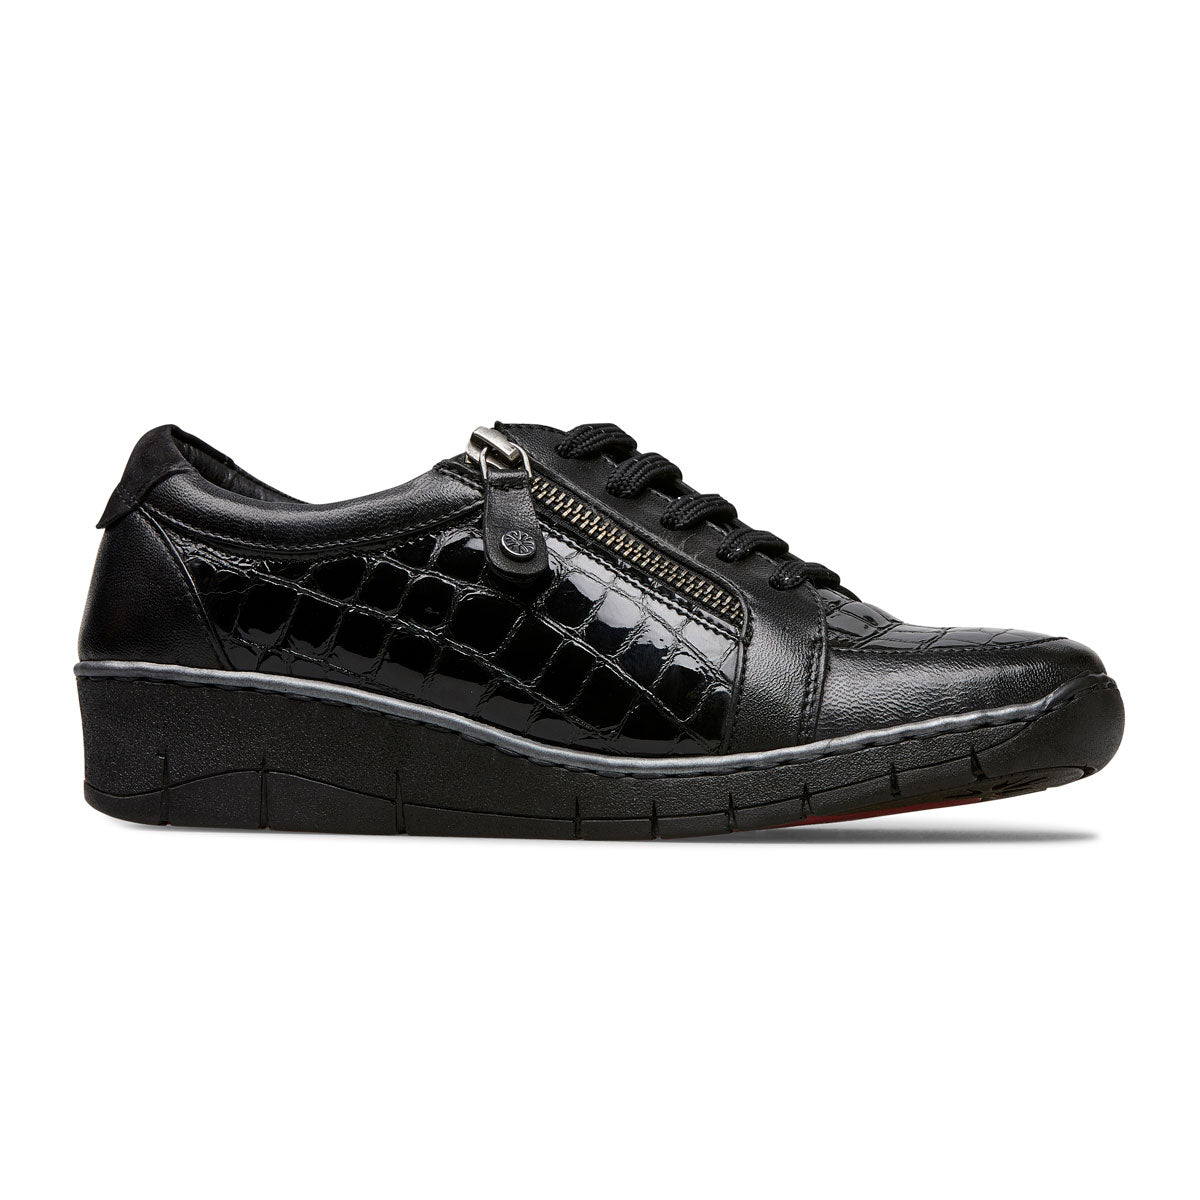 Van Dal Aubrey Black Patent Croc Leather Low Wedge Lace Up Shoes E - elevate your sole